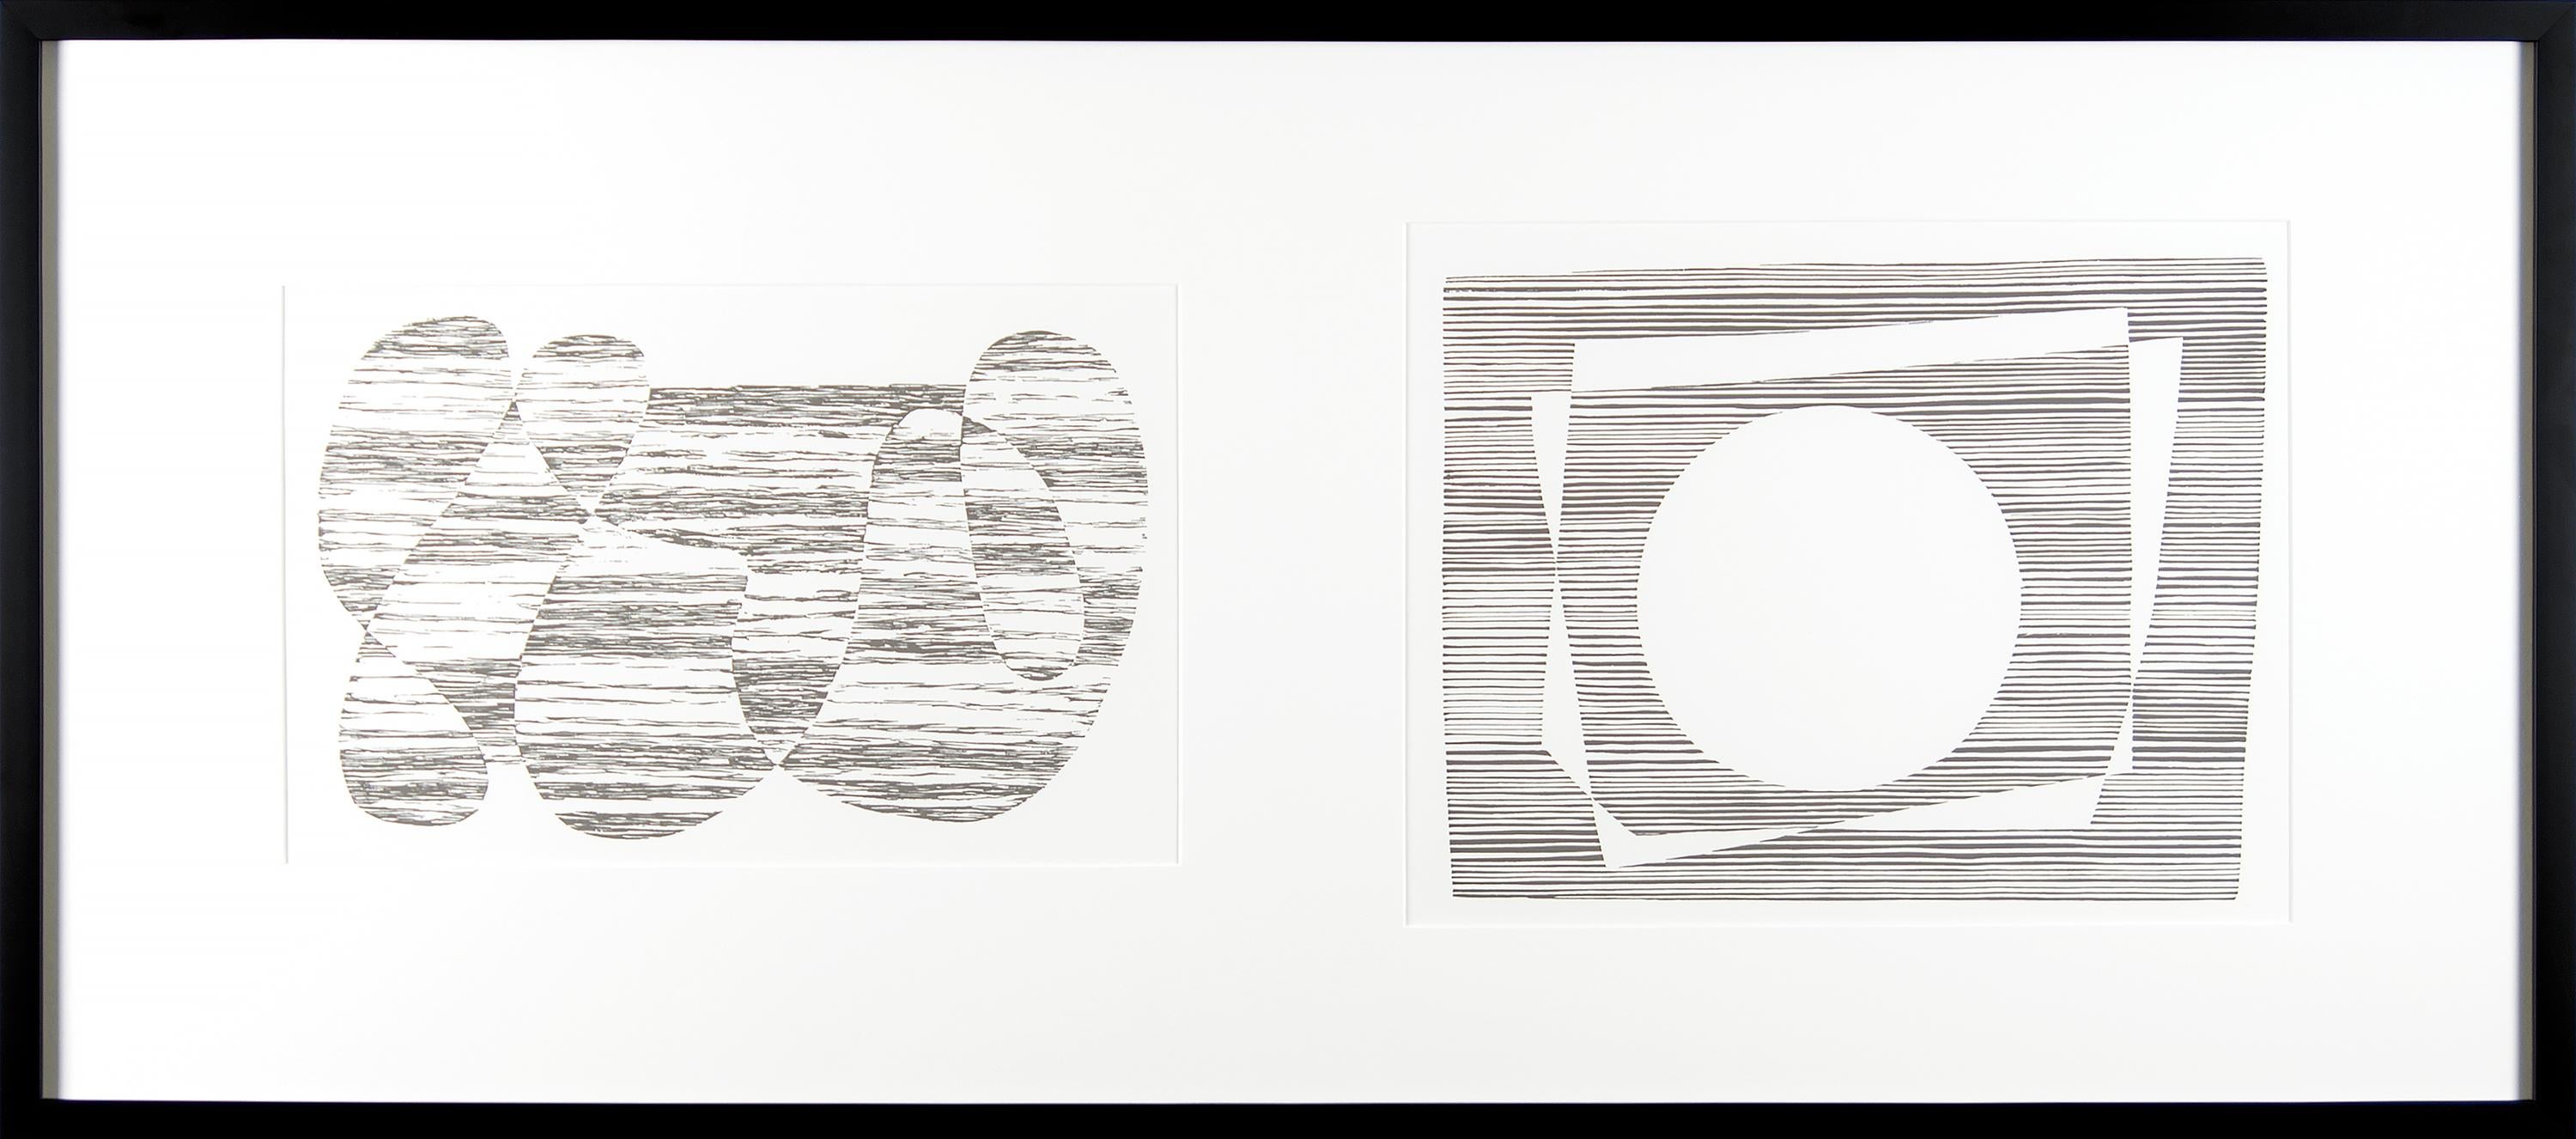 Sans titre de la formulation : Articulation - Print de Josef Albers